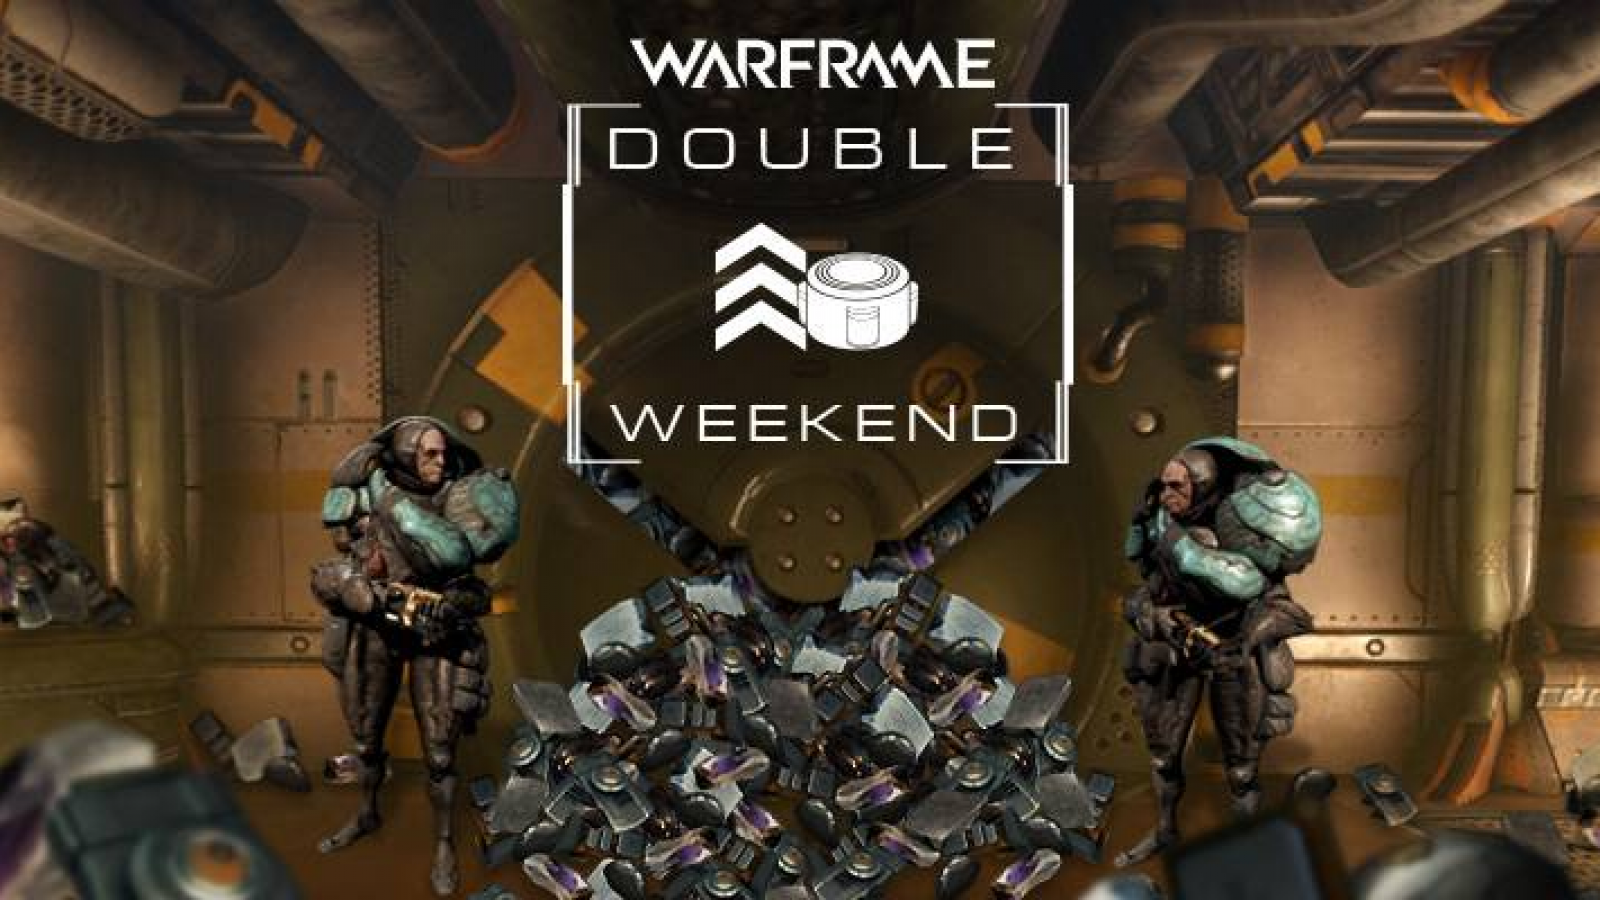 Double Resource Weekend!